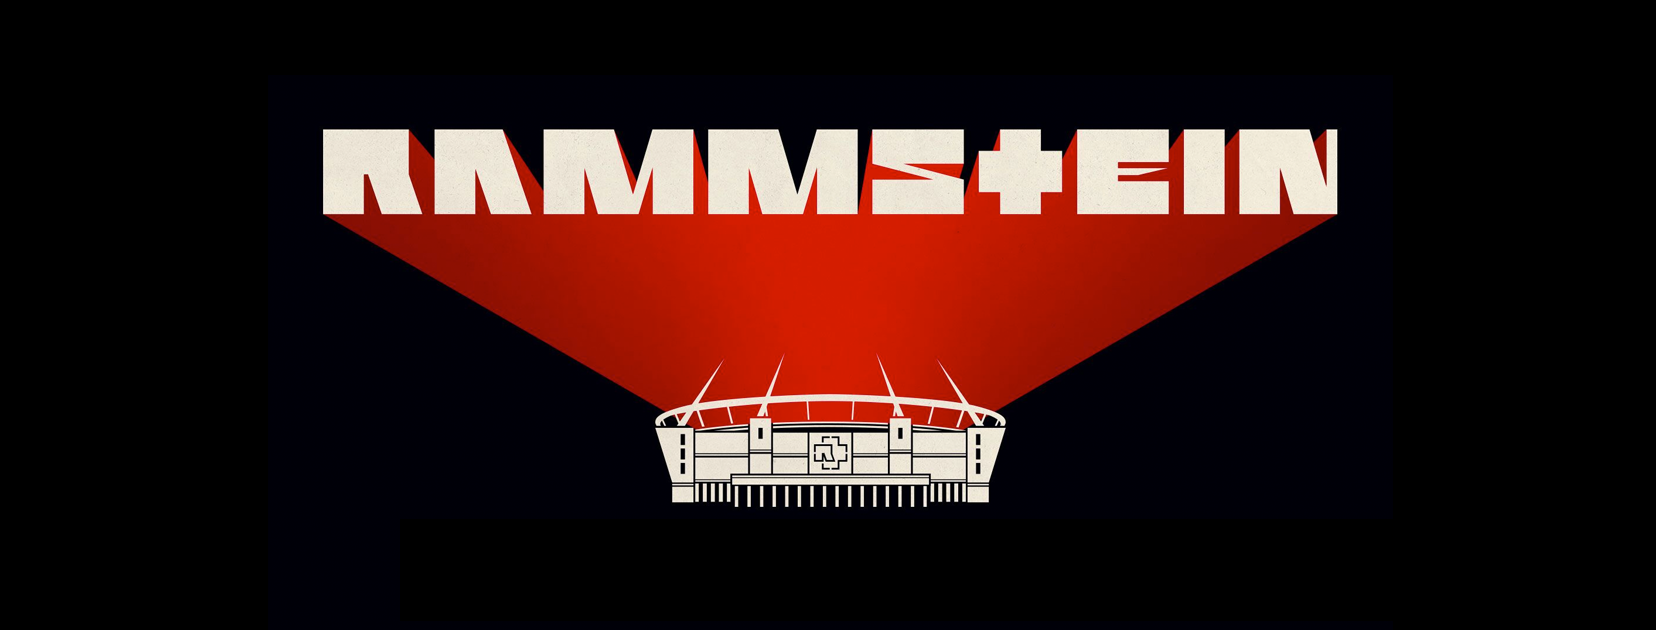 Rammstein announce European 2019 summer Tour